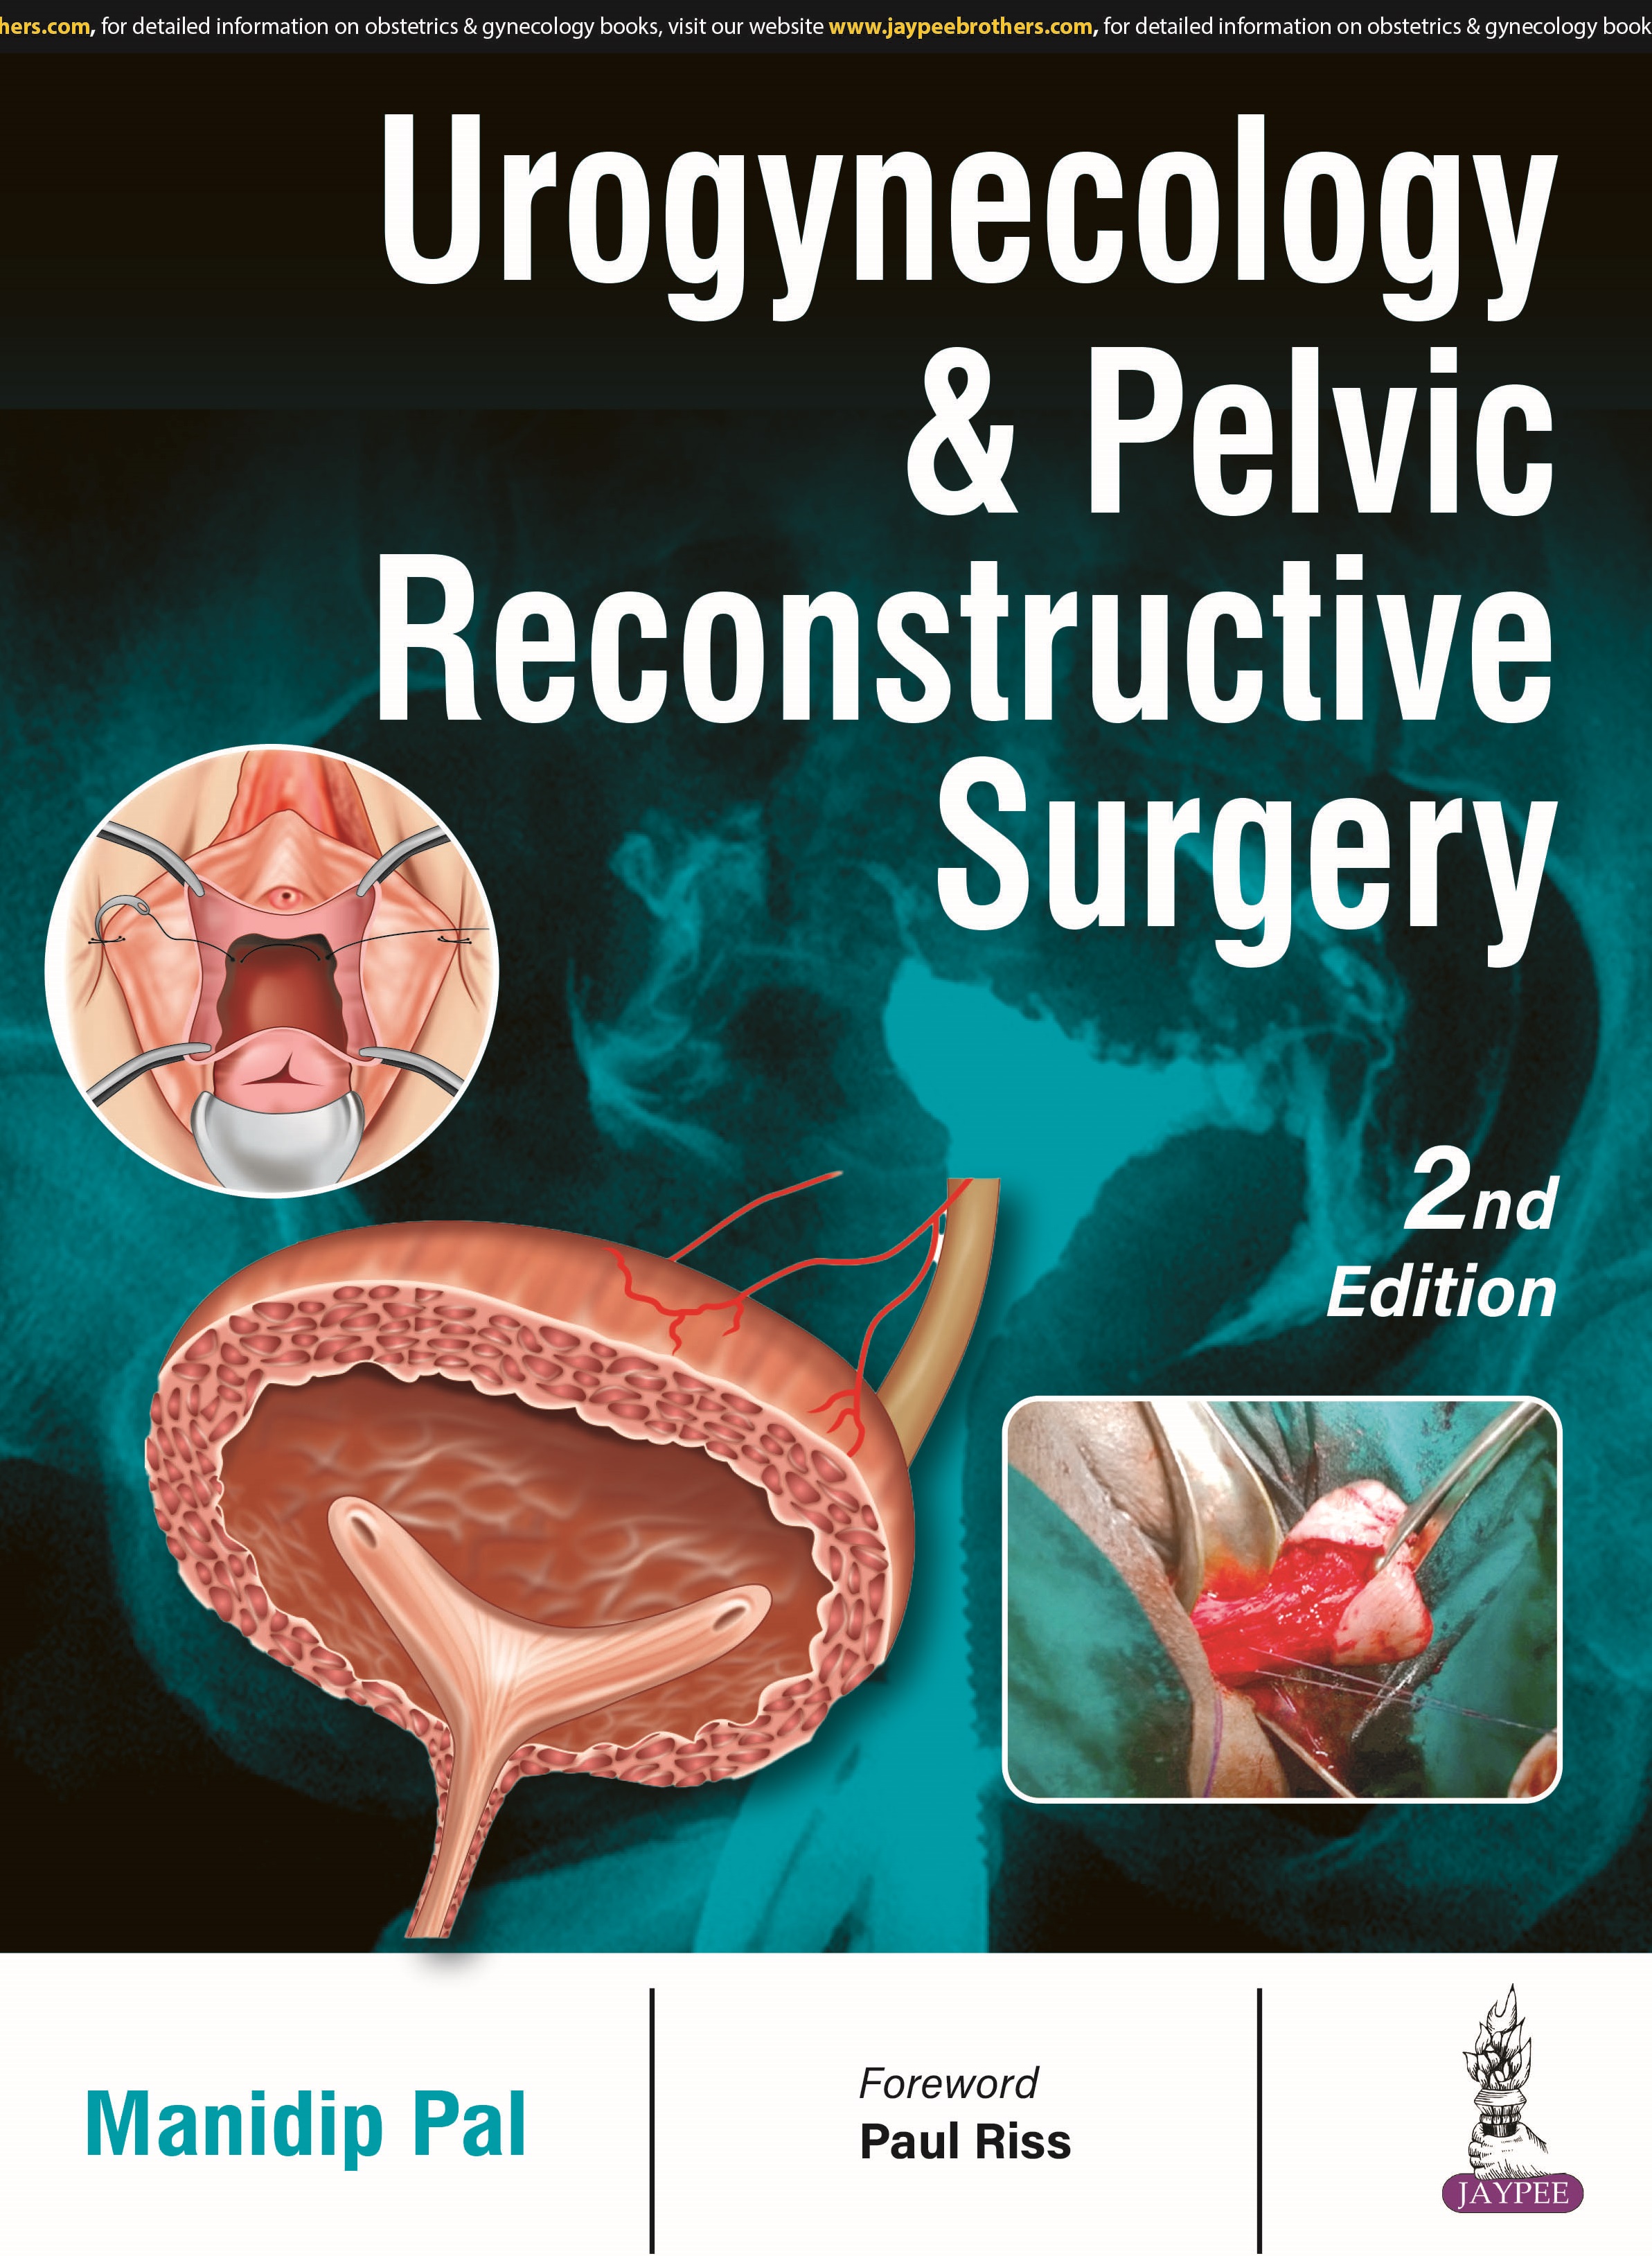 Urogynecology & Pelvic Reconstructive Surgery 2nd Edition